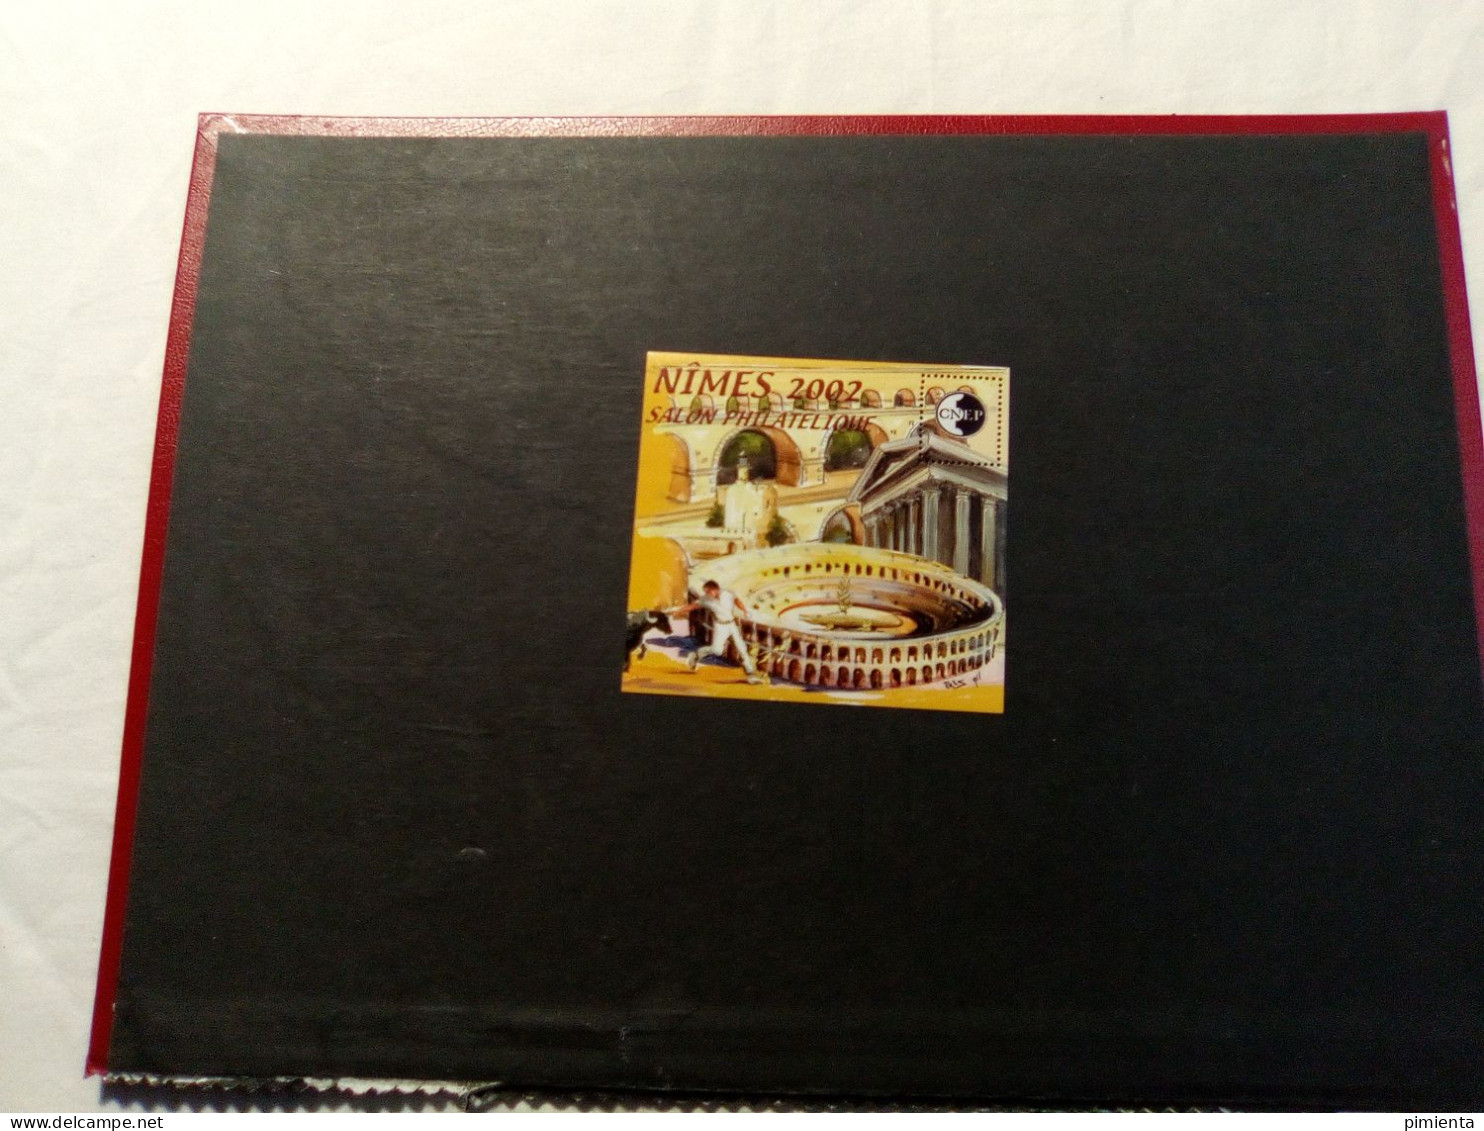 timbres de France neufs, lot de 8 blocs CNEP